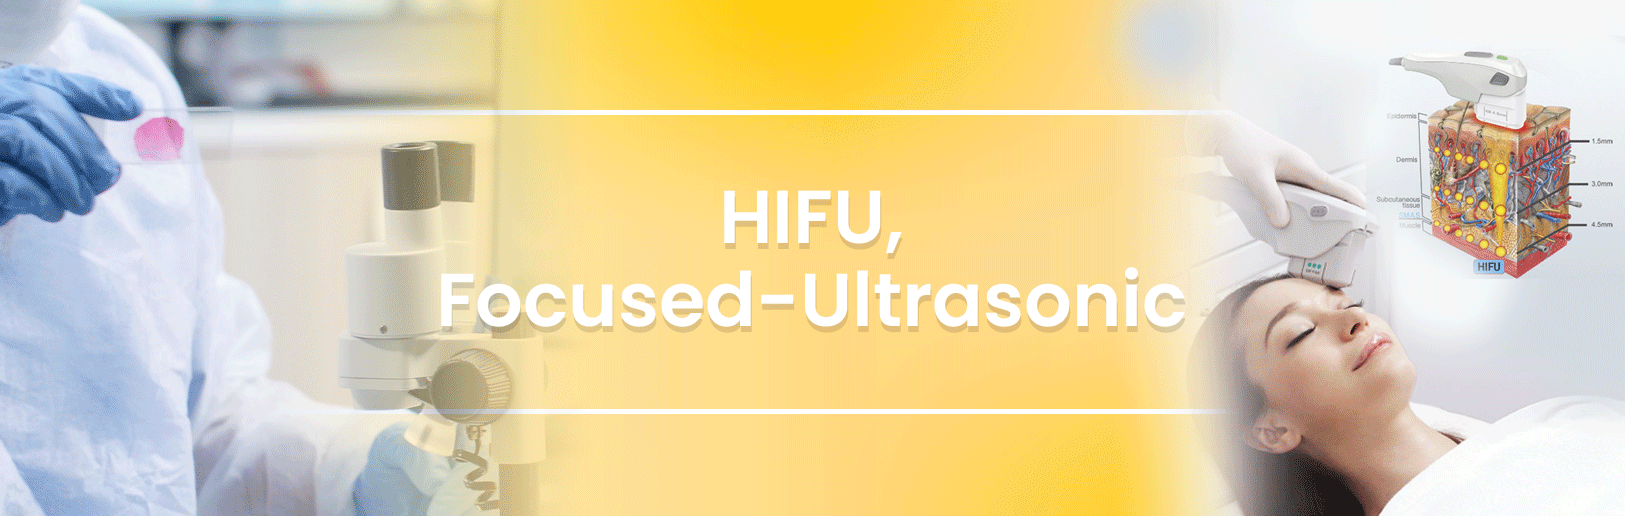 HIFU / Focused-Ultrasonic﻿ Machines